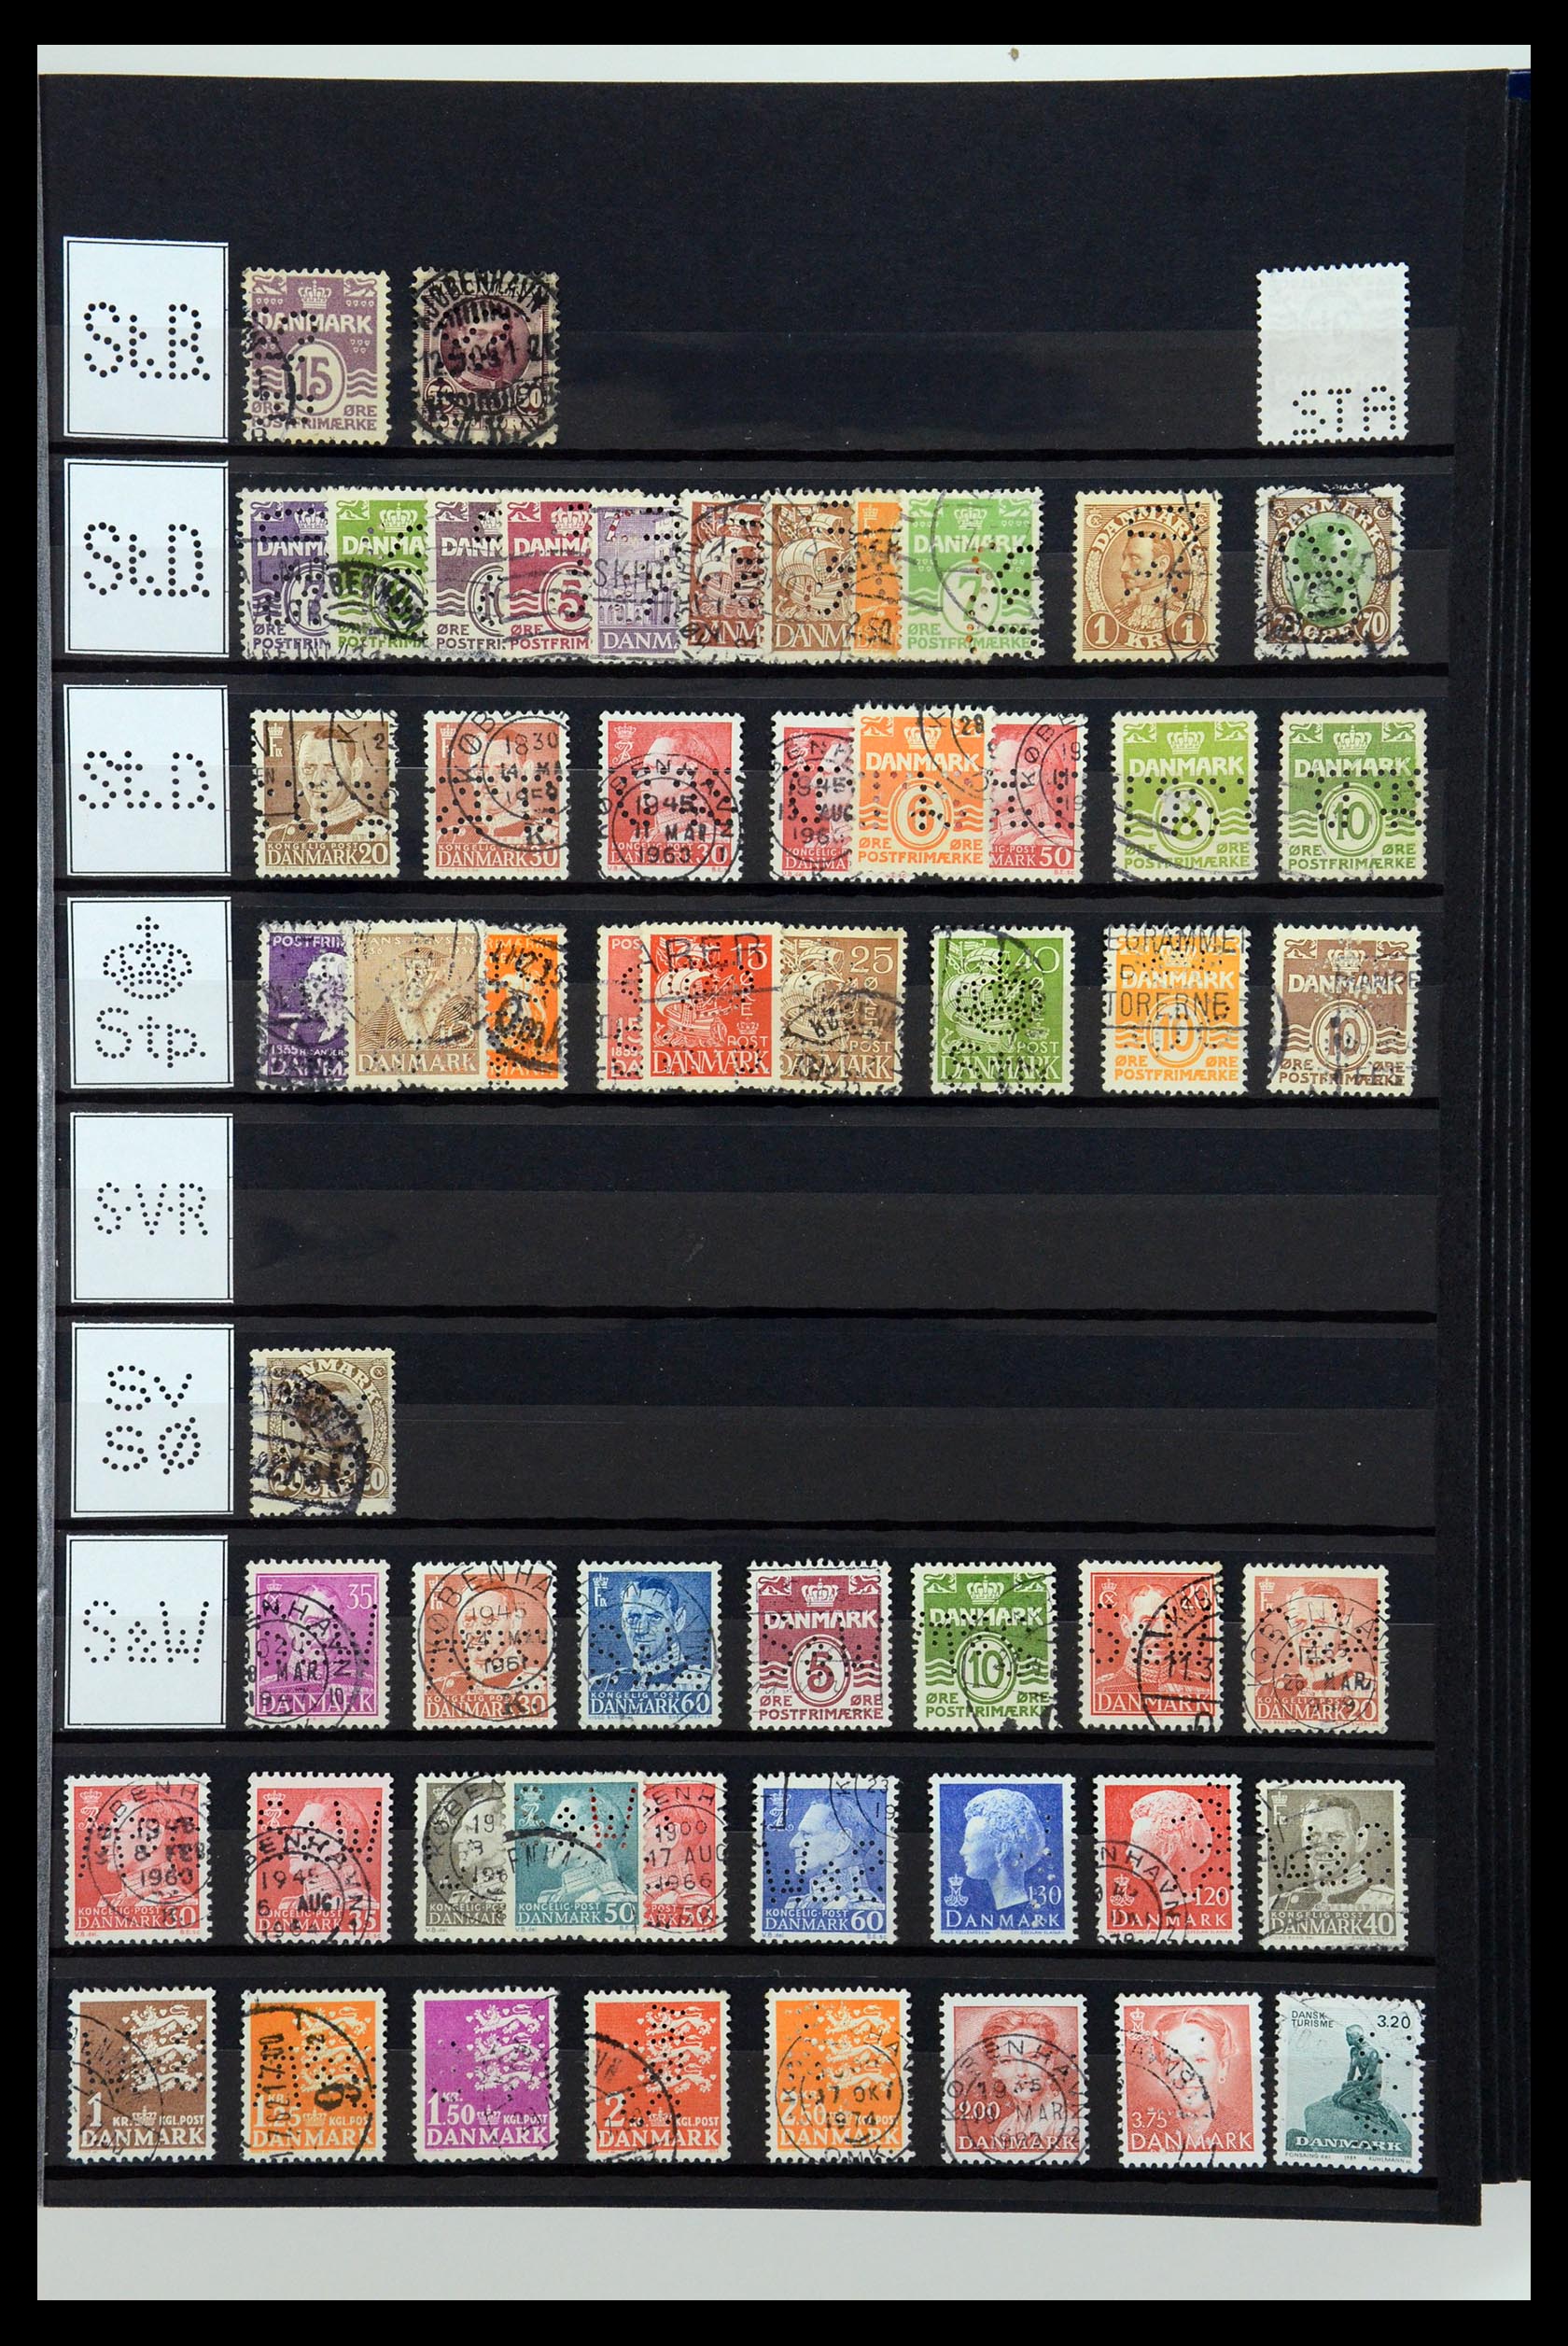 36396 211 - Stamp collection 36396 Denmark perfins.